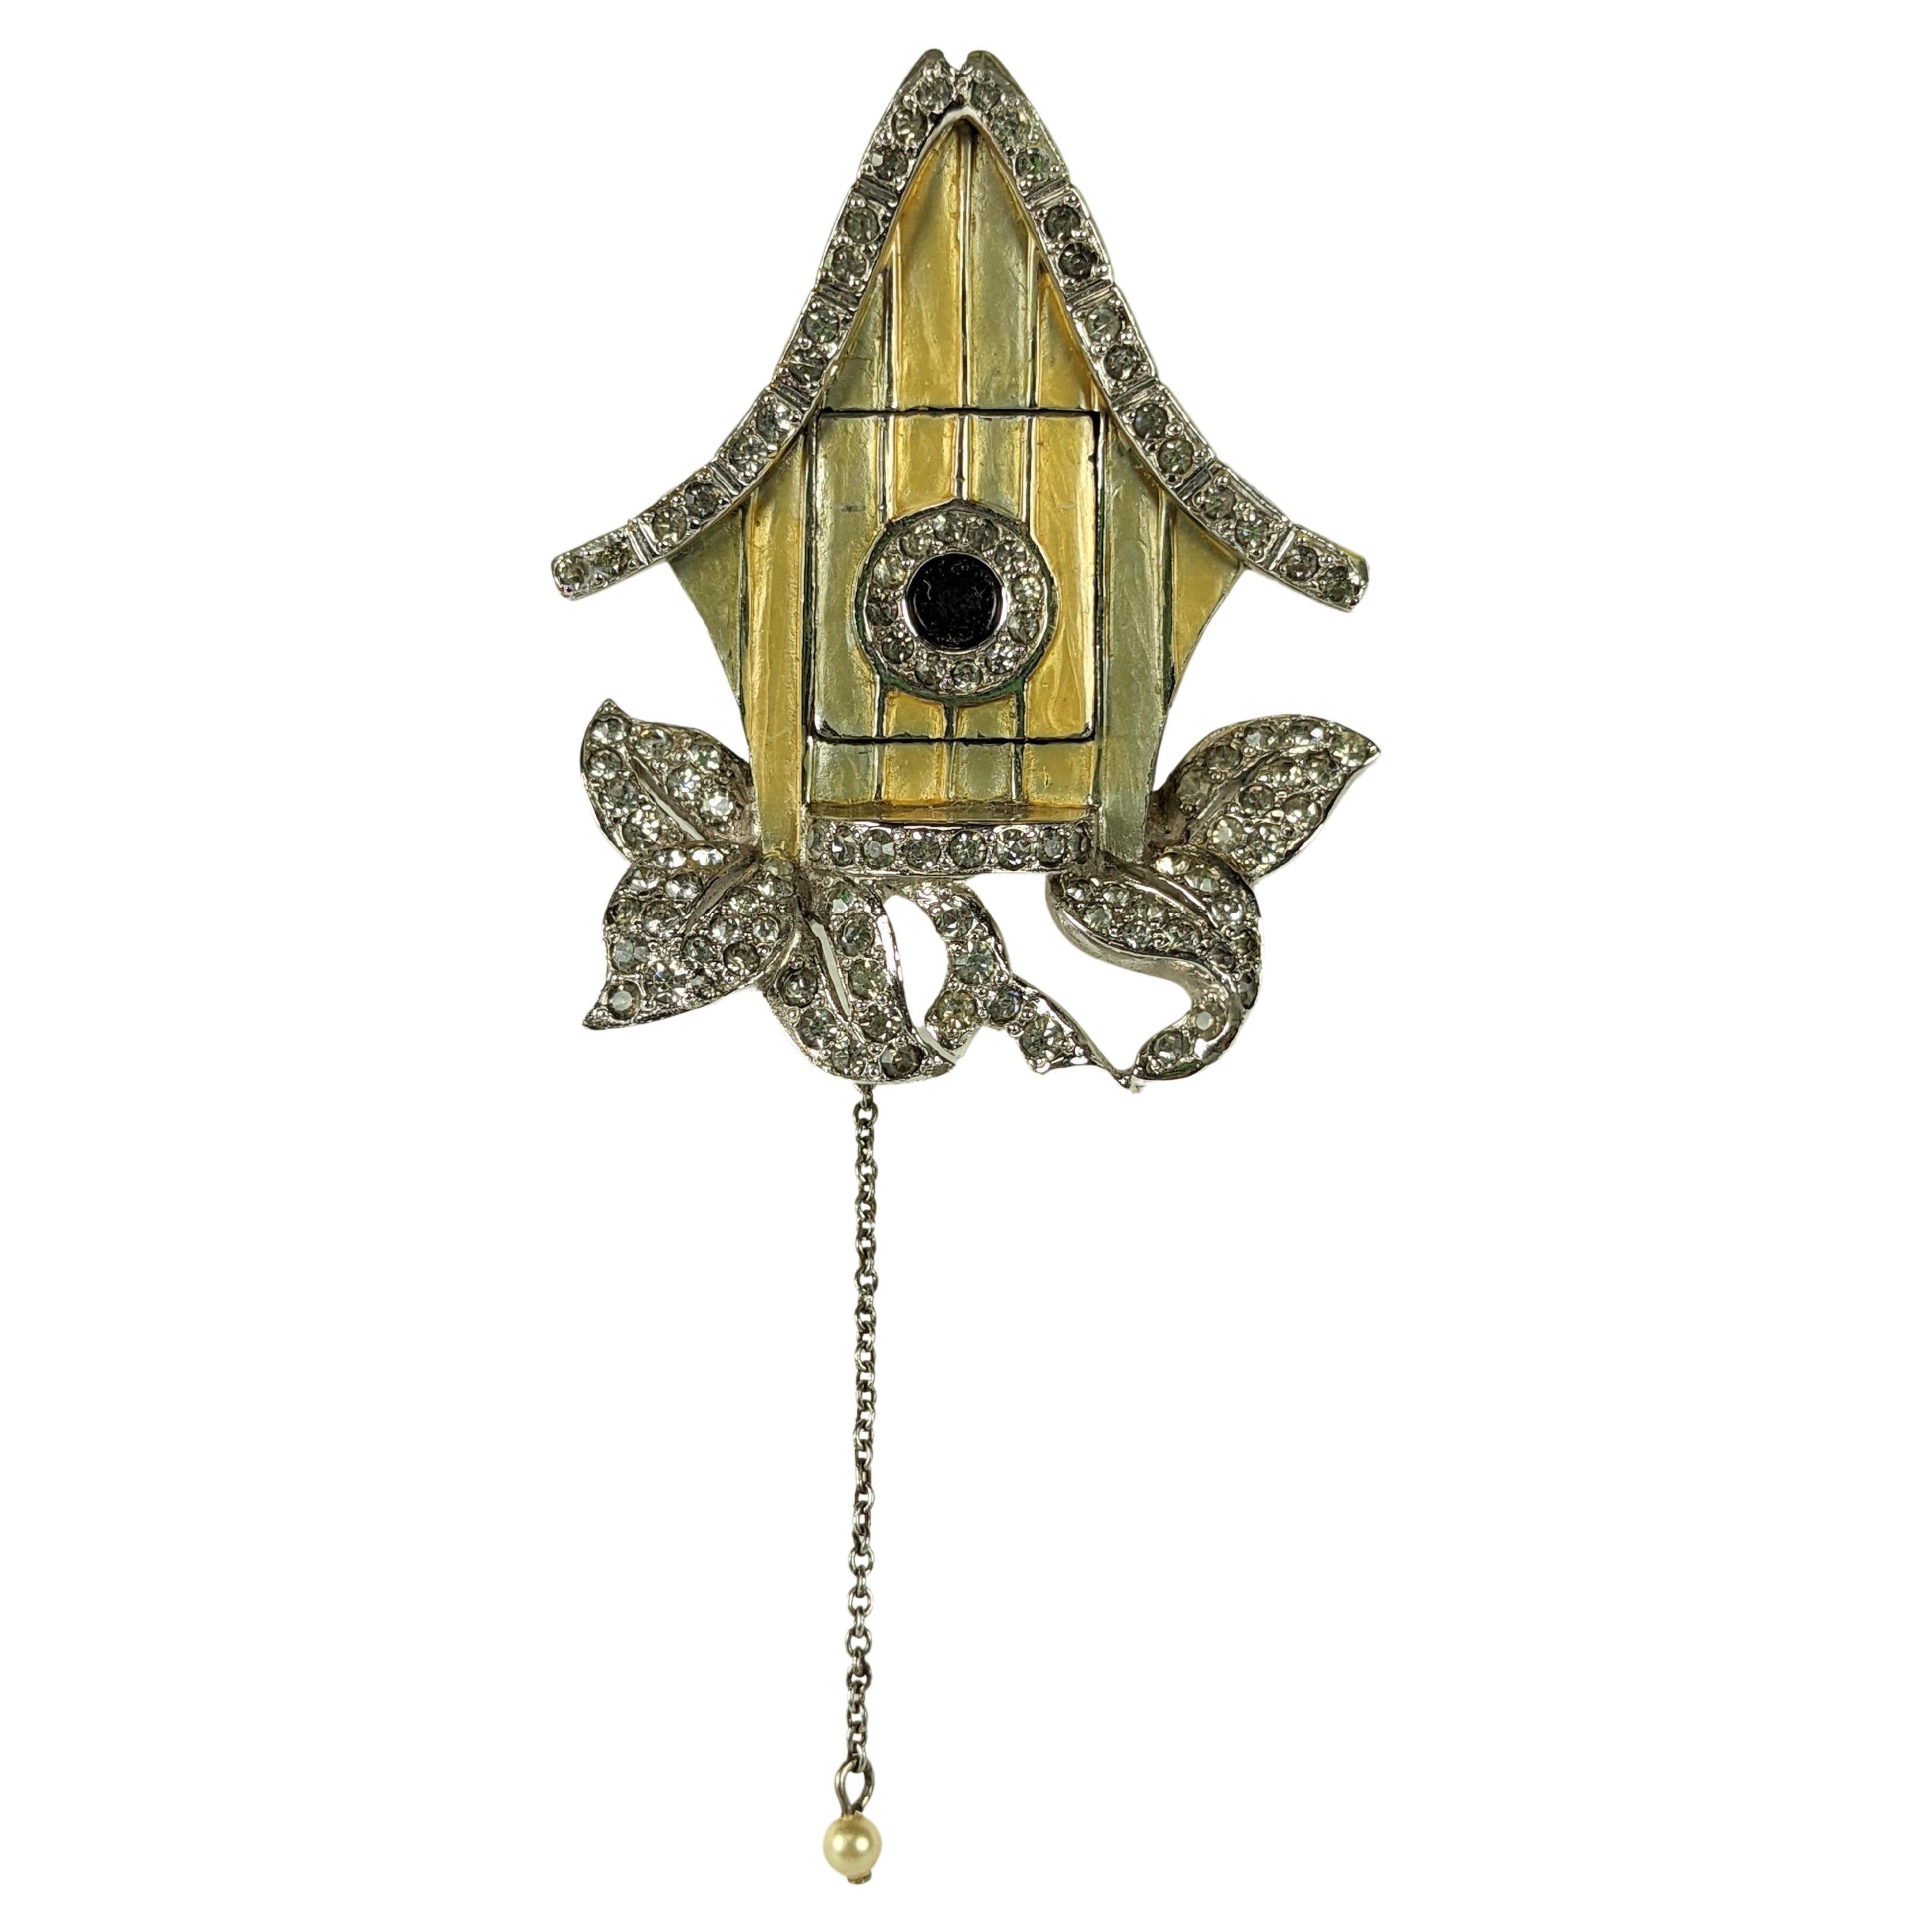  Rare 1940 Marcel Boucher Mechanical Tremblant Cuckoo Clock Clip  For Sale